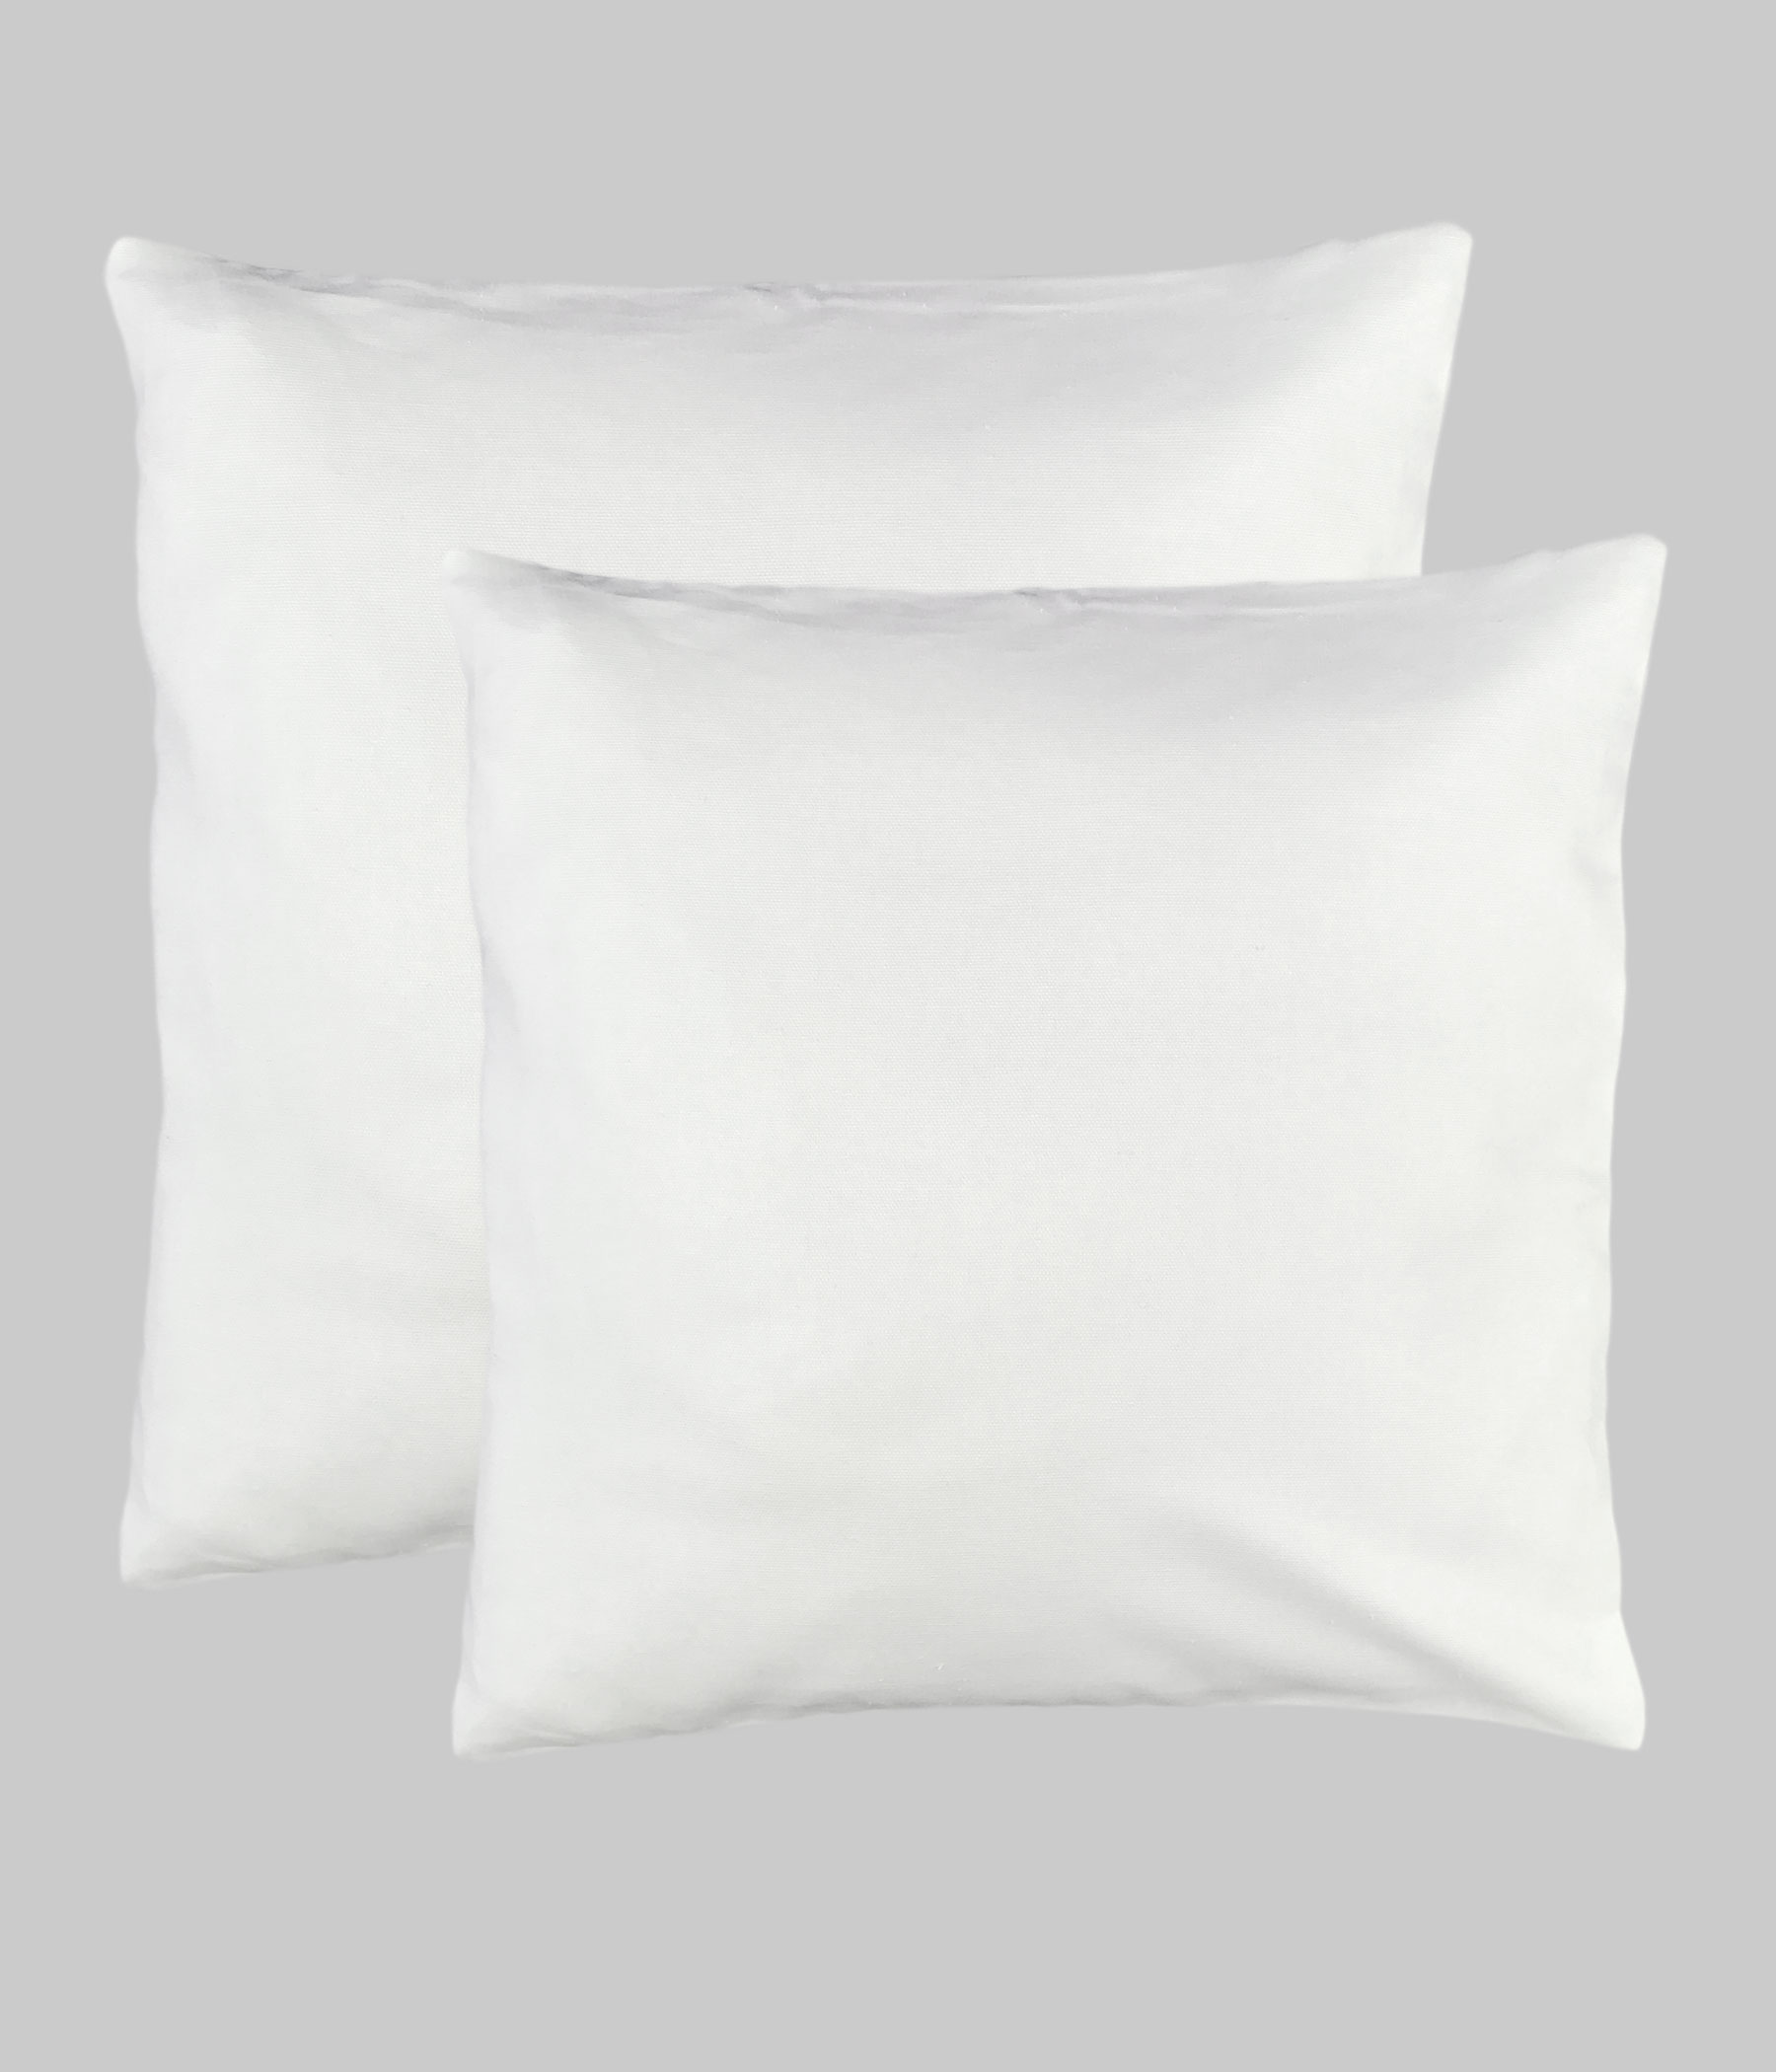 Blank white cushion covers group photo